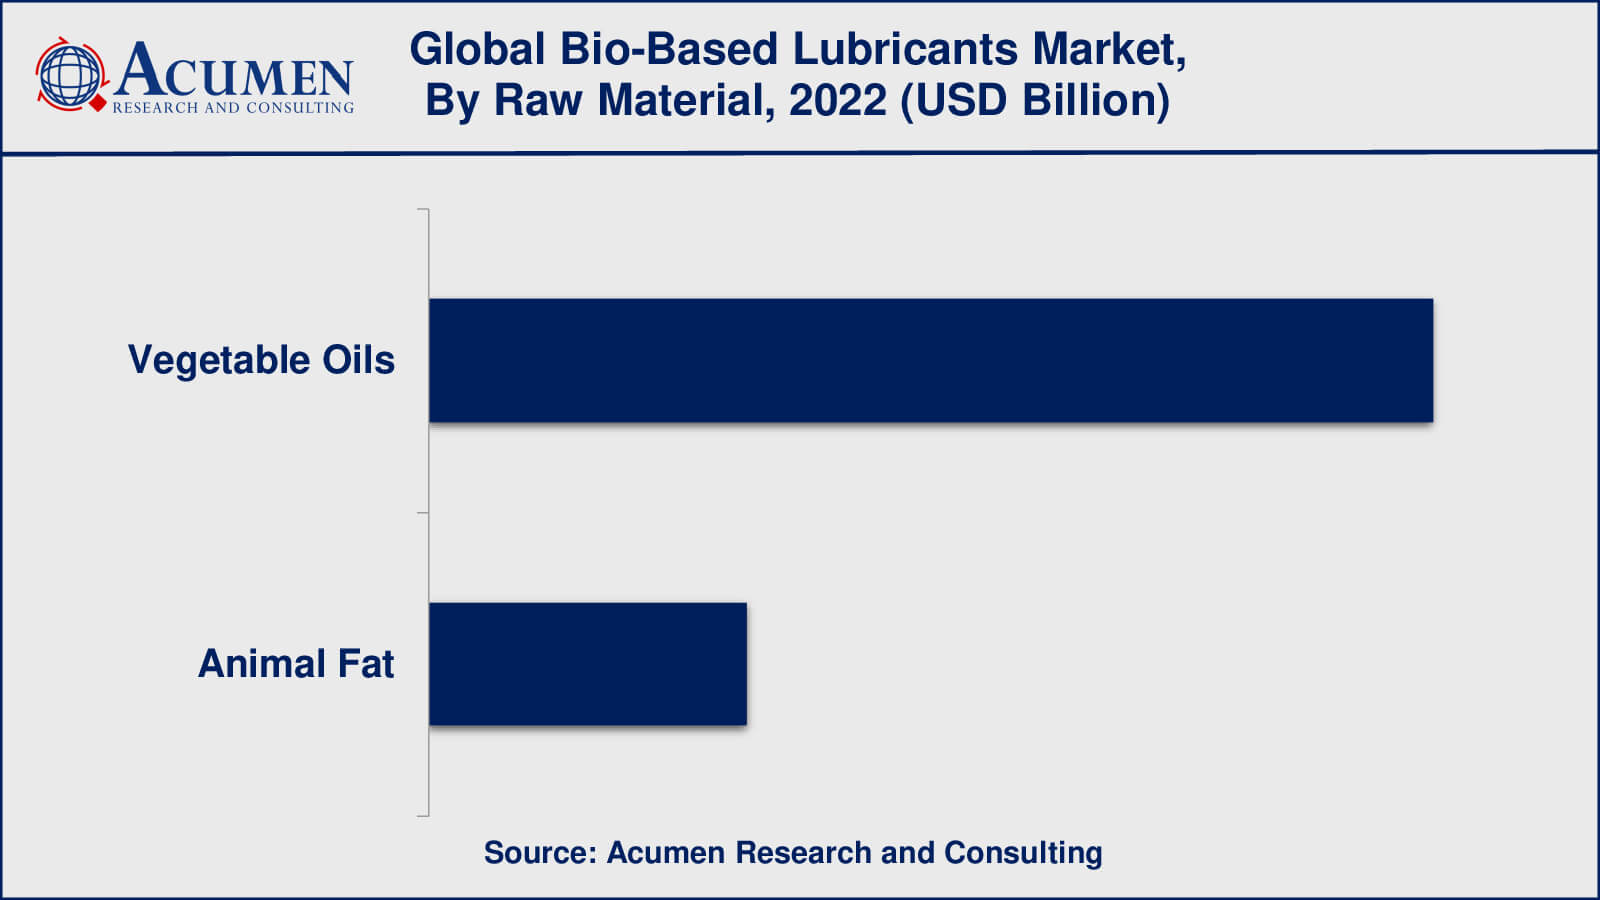 Bio-Based Lubricants Market Drivers